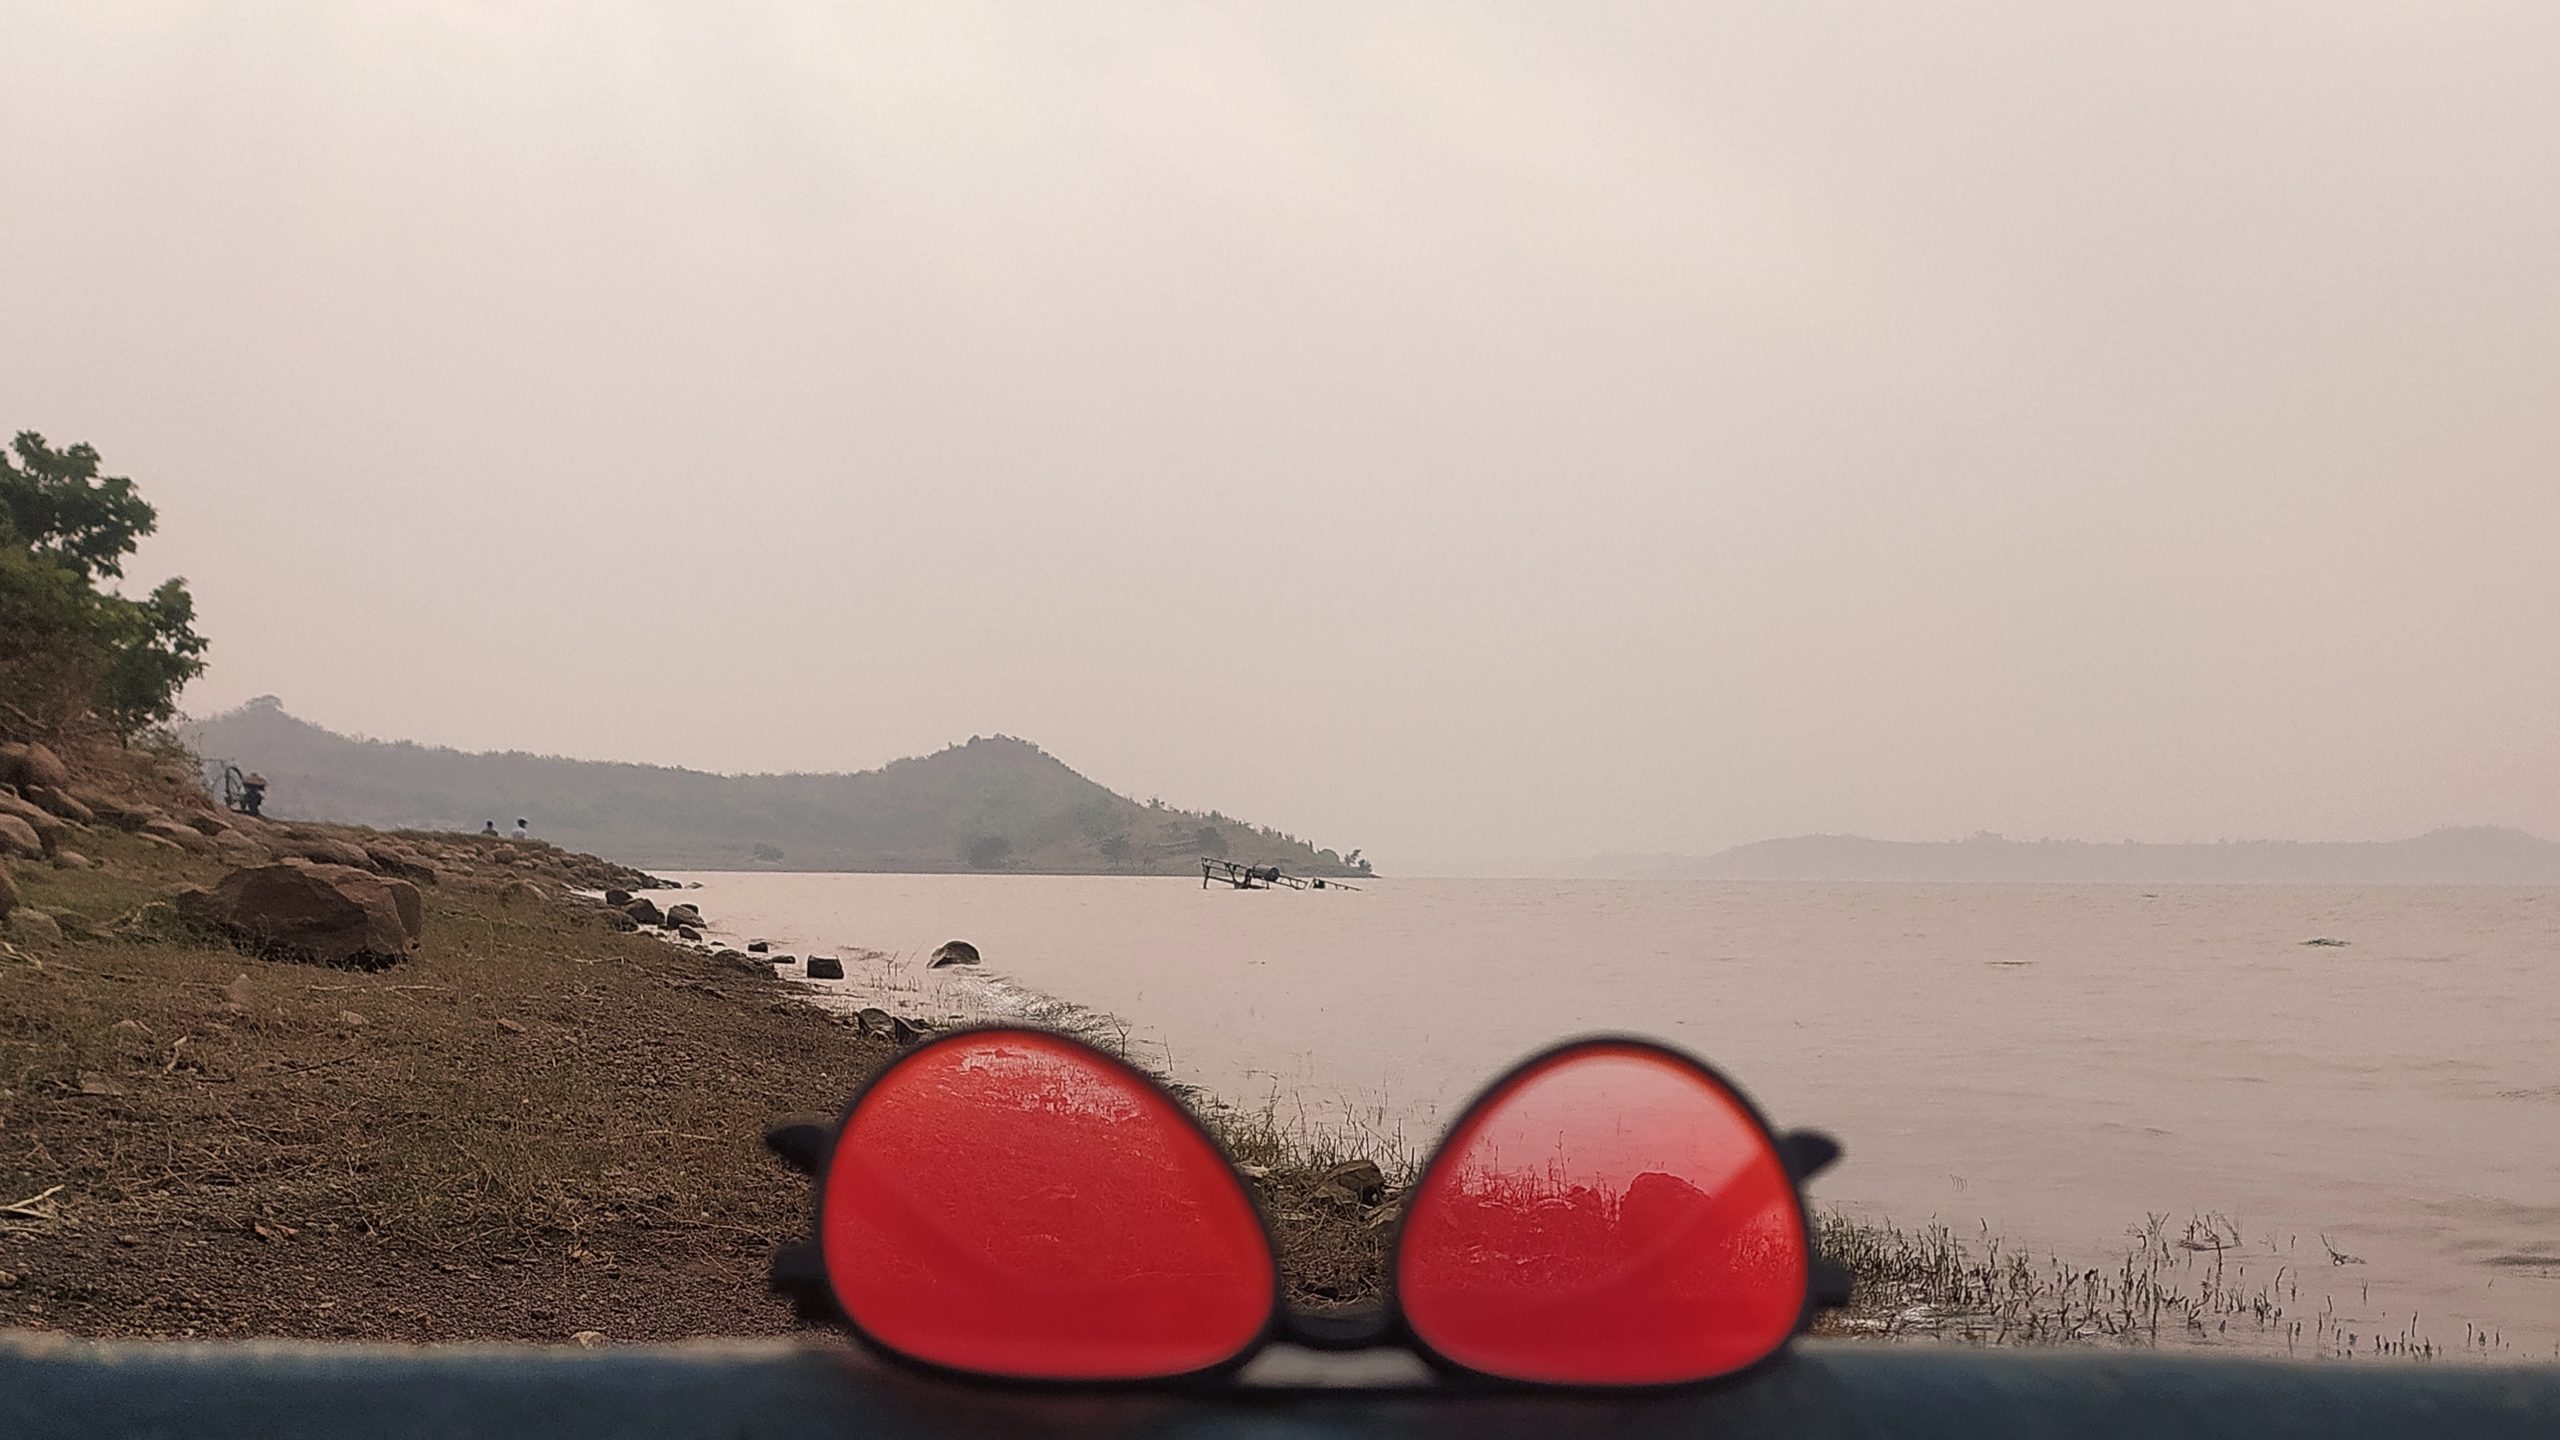 Sunglasses and a lake